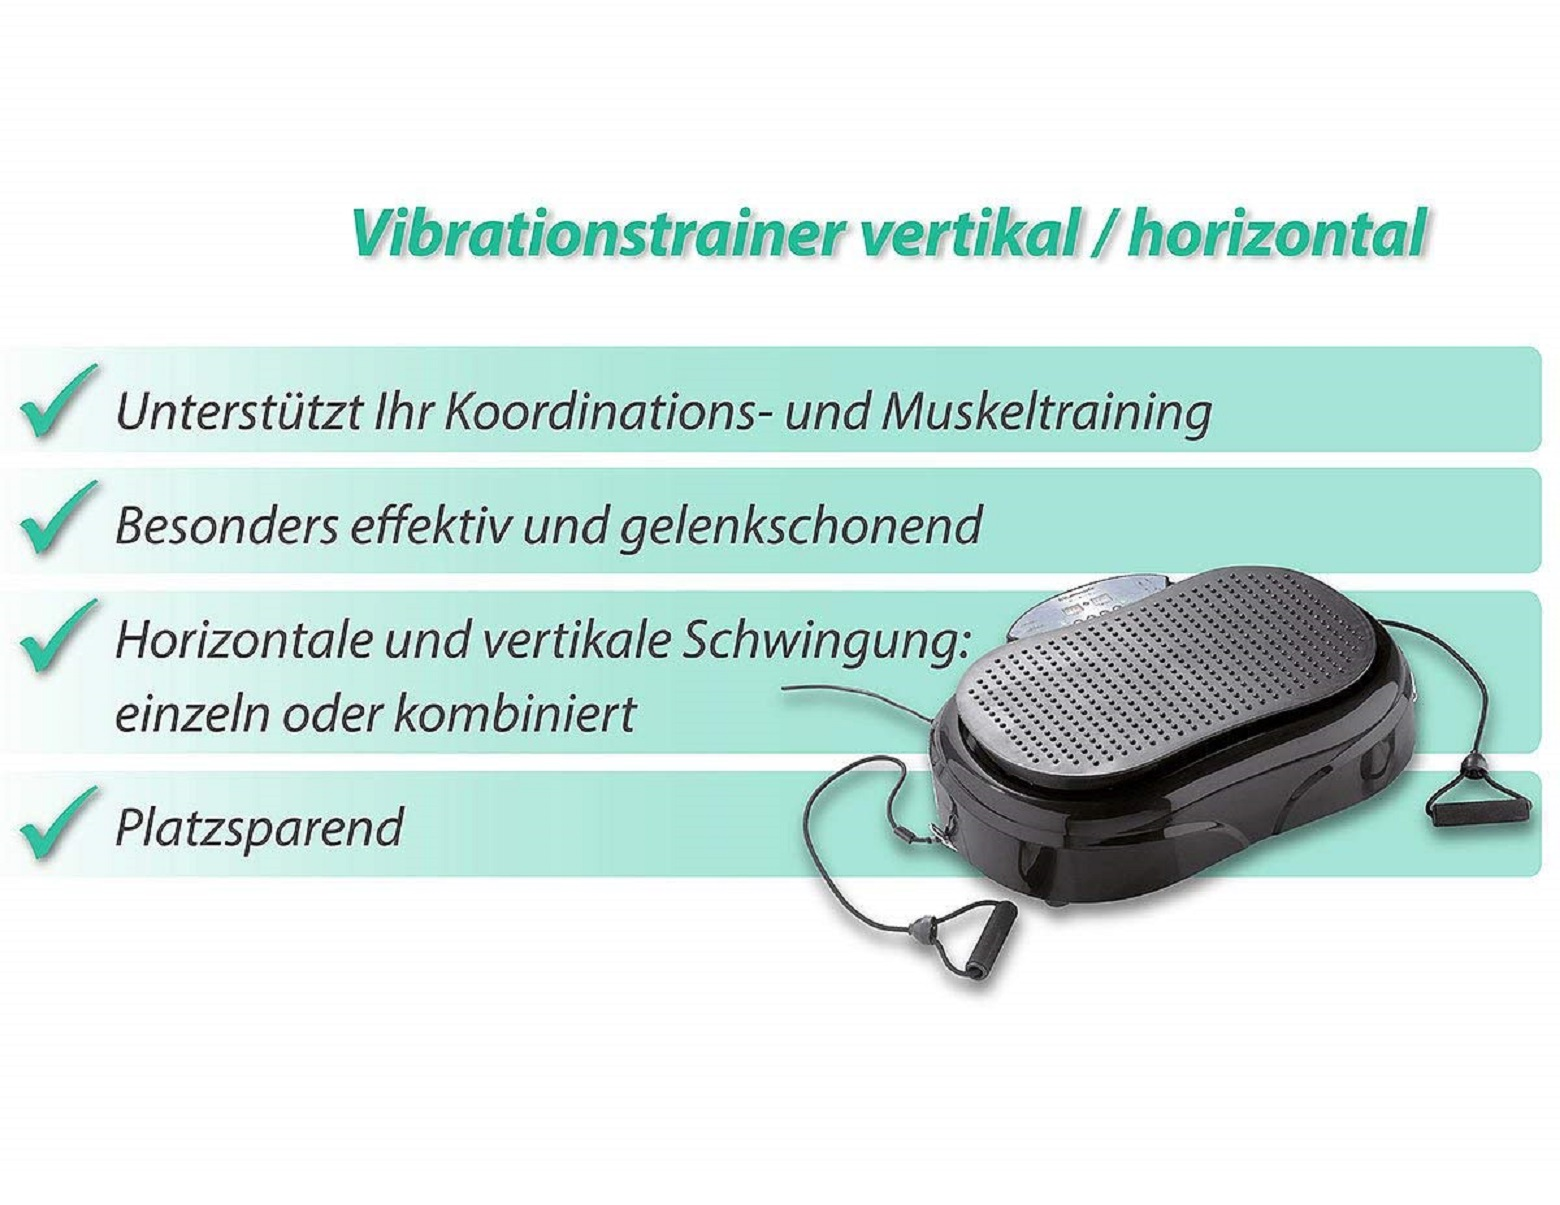 NEWGEN Vibrationsplatte mit MEDICALS Vibrationstrainer, Expander schwarz